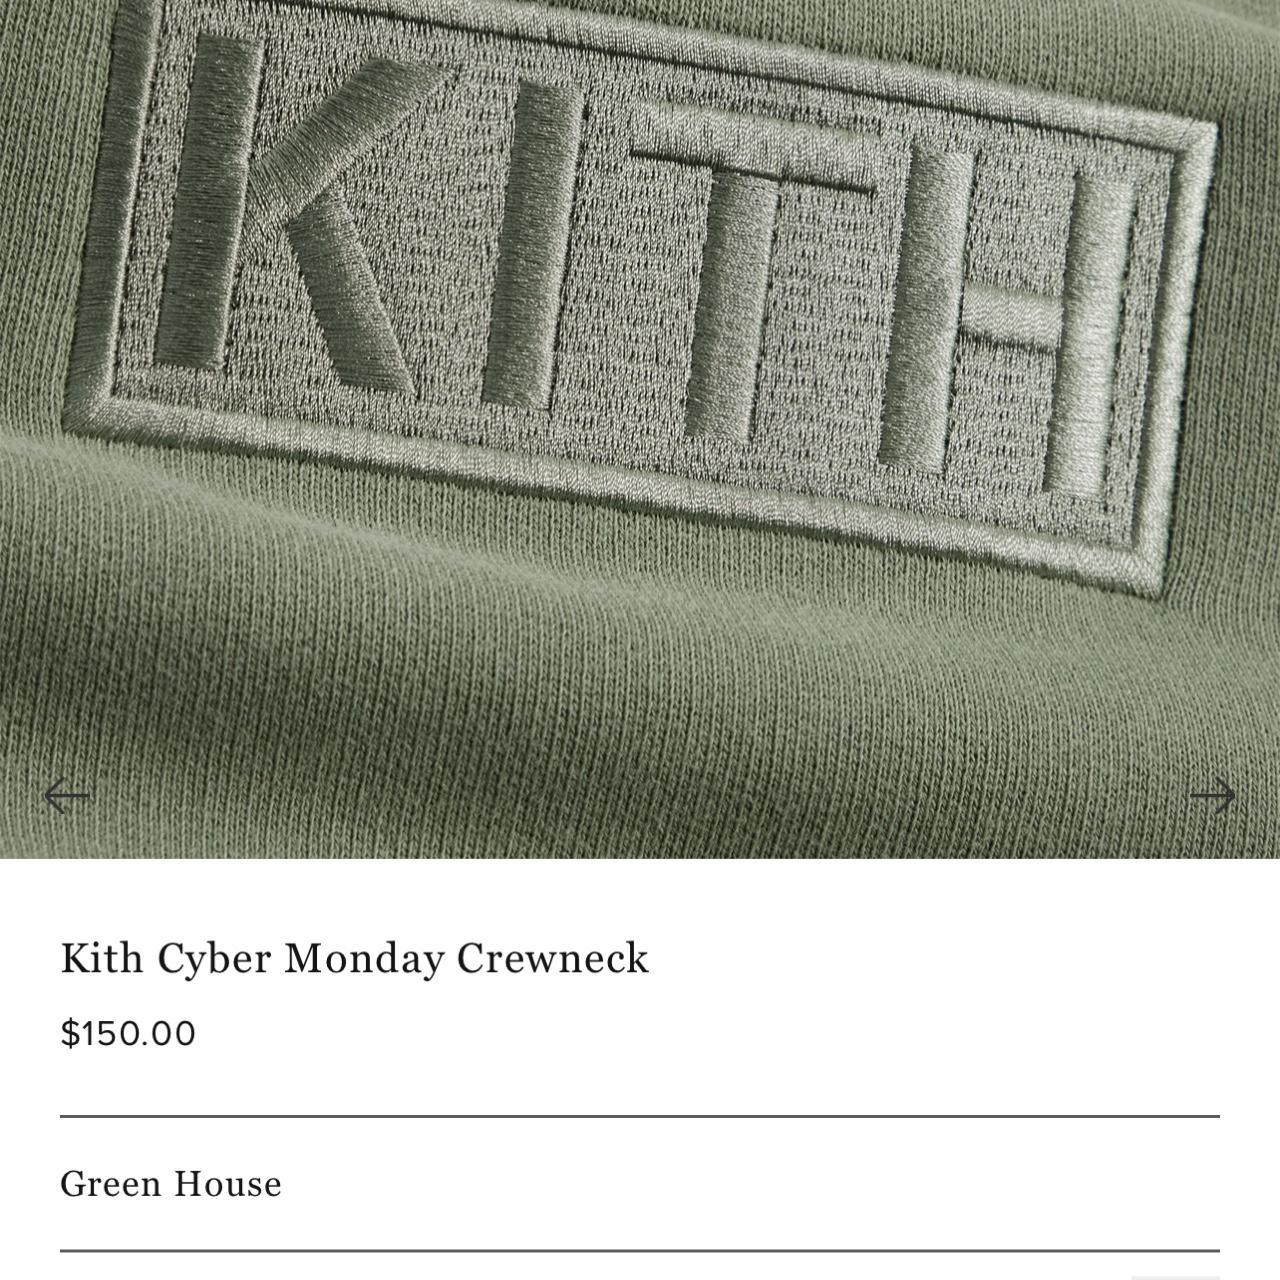 Cyber Monday Crewneck , #Kith , DETAILS, 400 GSM...